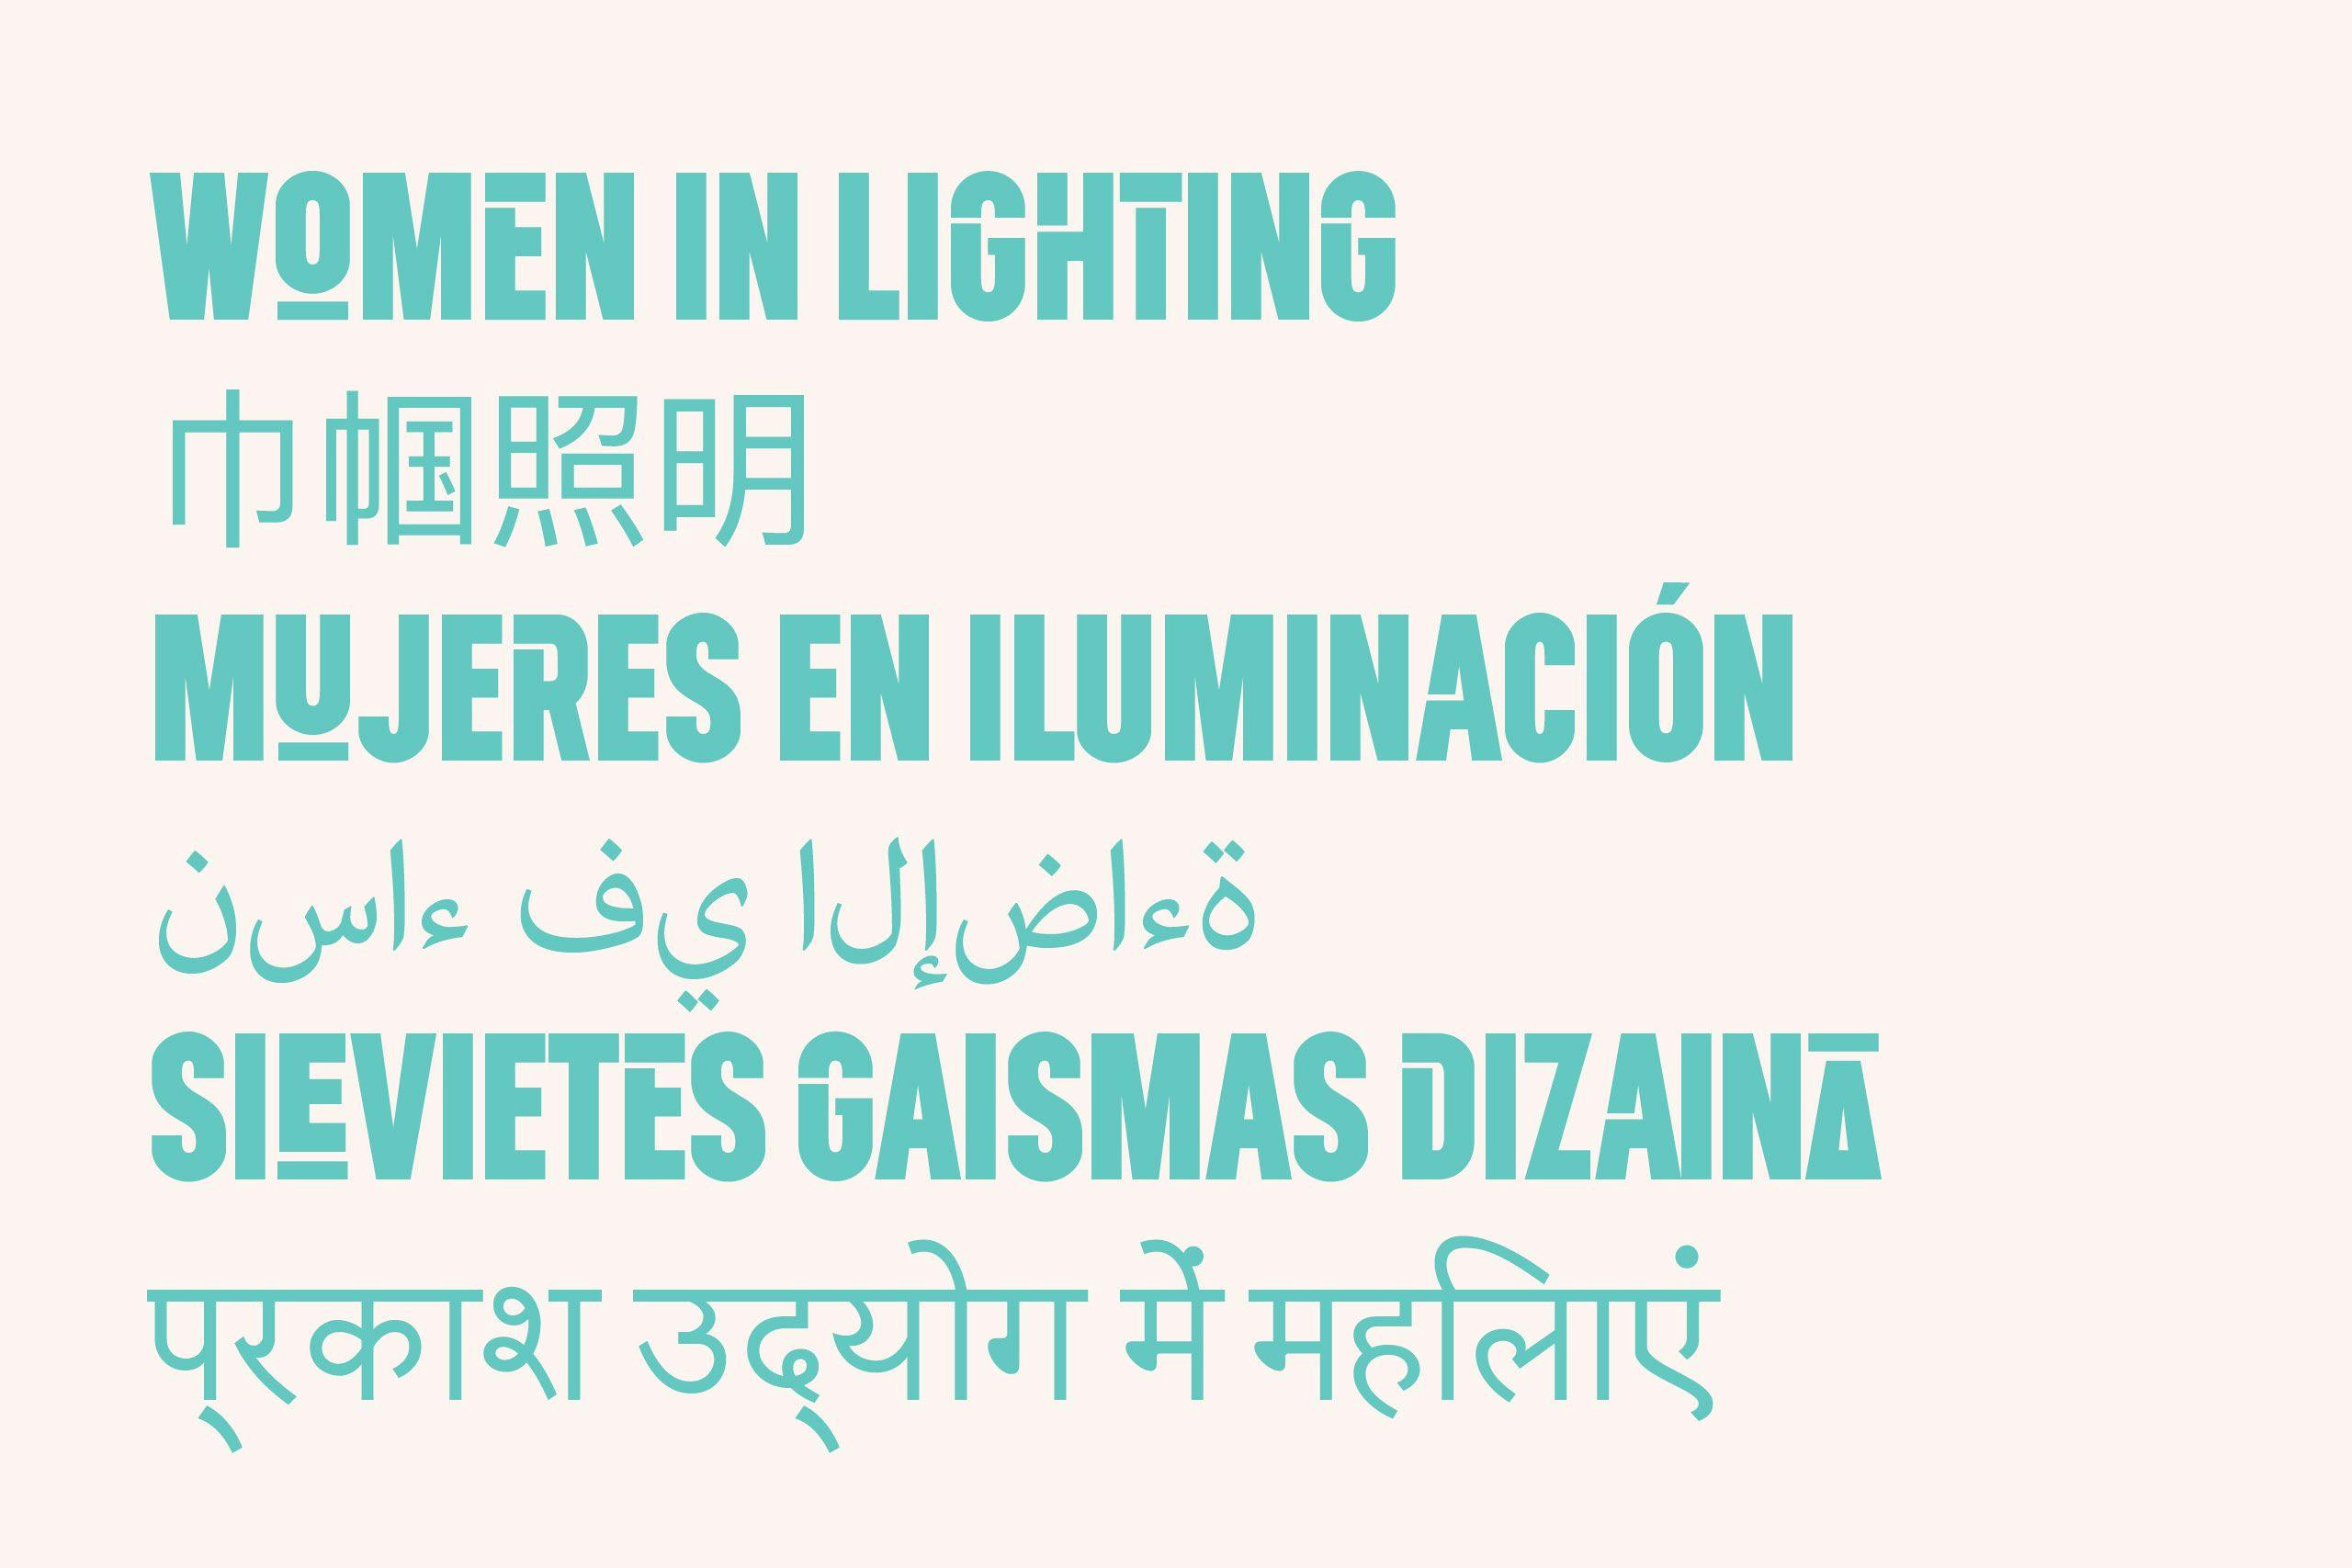 Women in Lighting